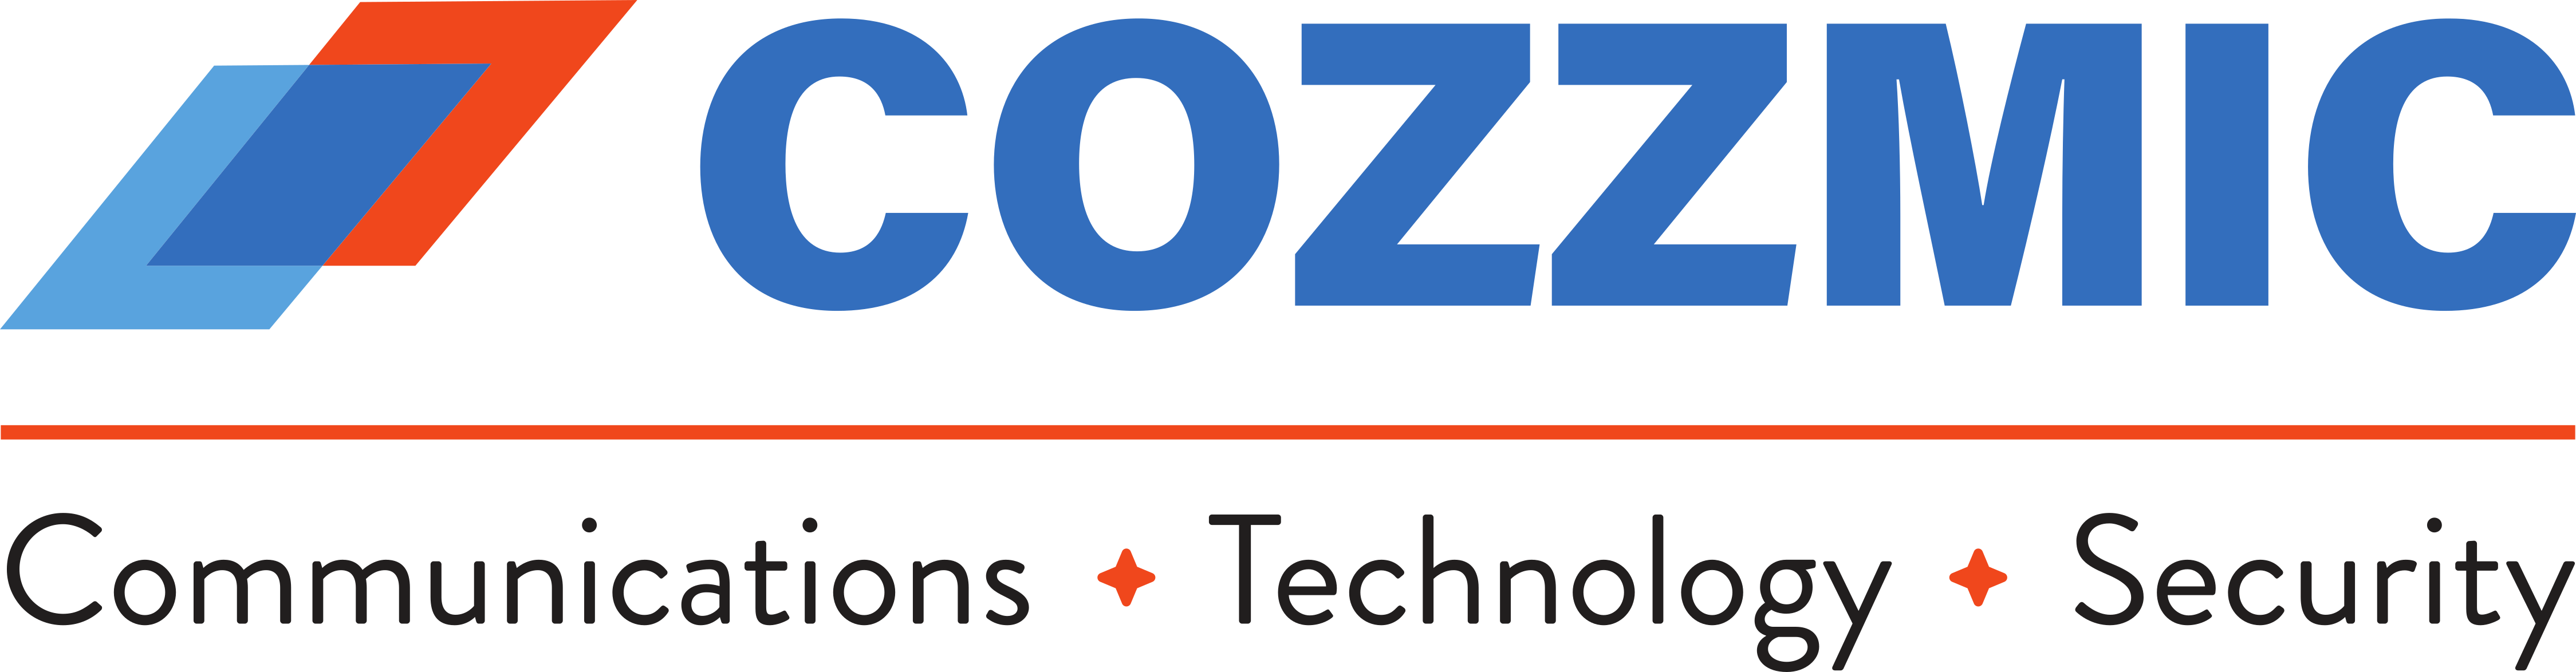 Cozzmic Communications*Technology*Security